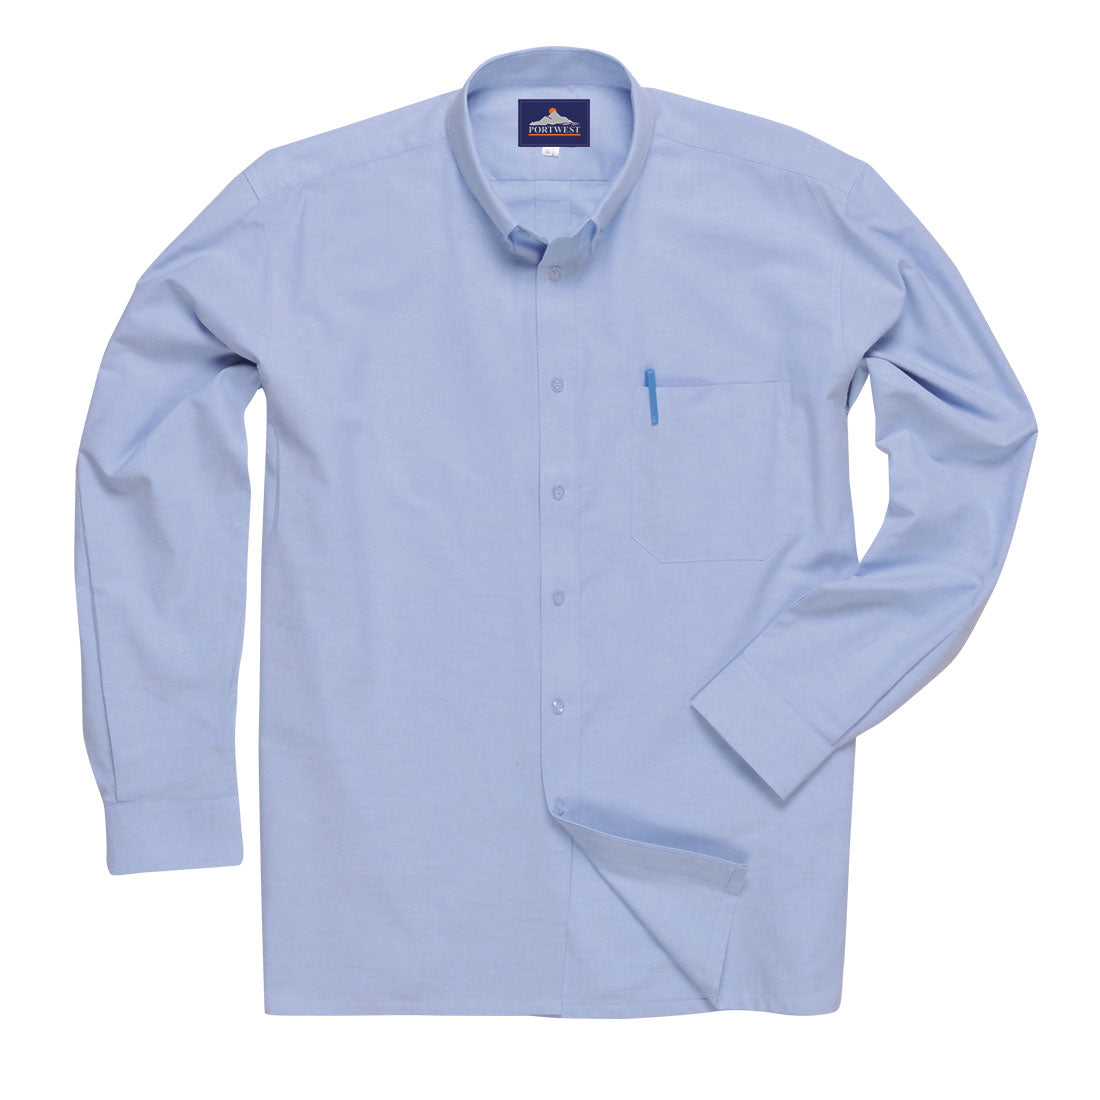 Easycare Oxford Shirt, Long Sleeves